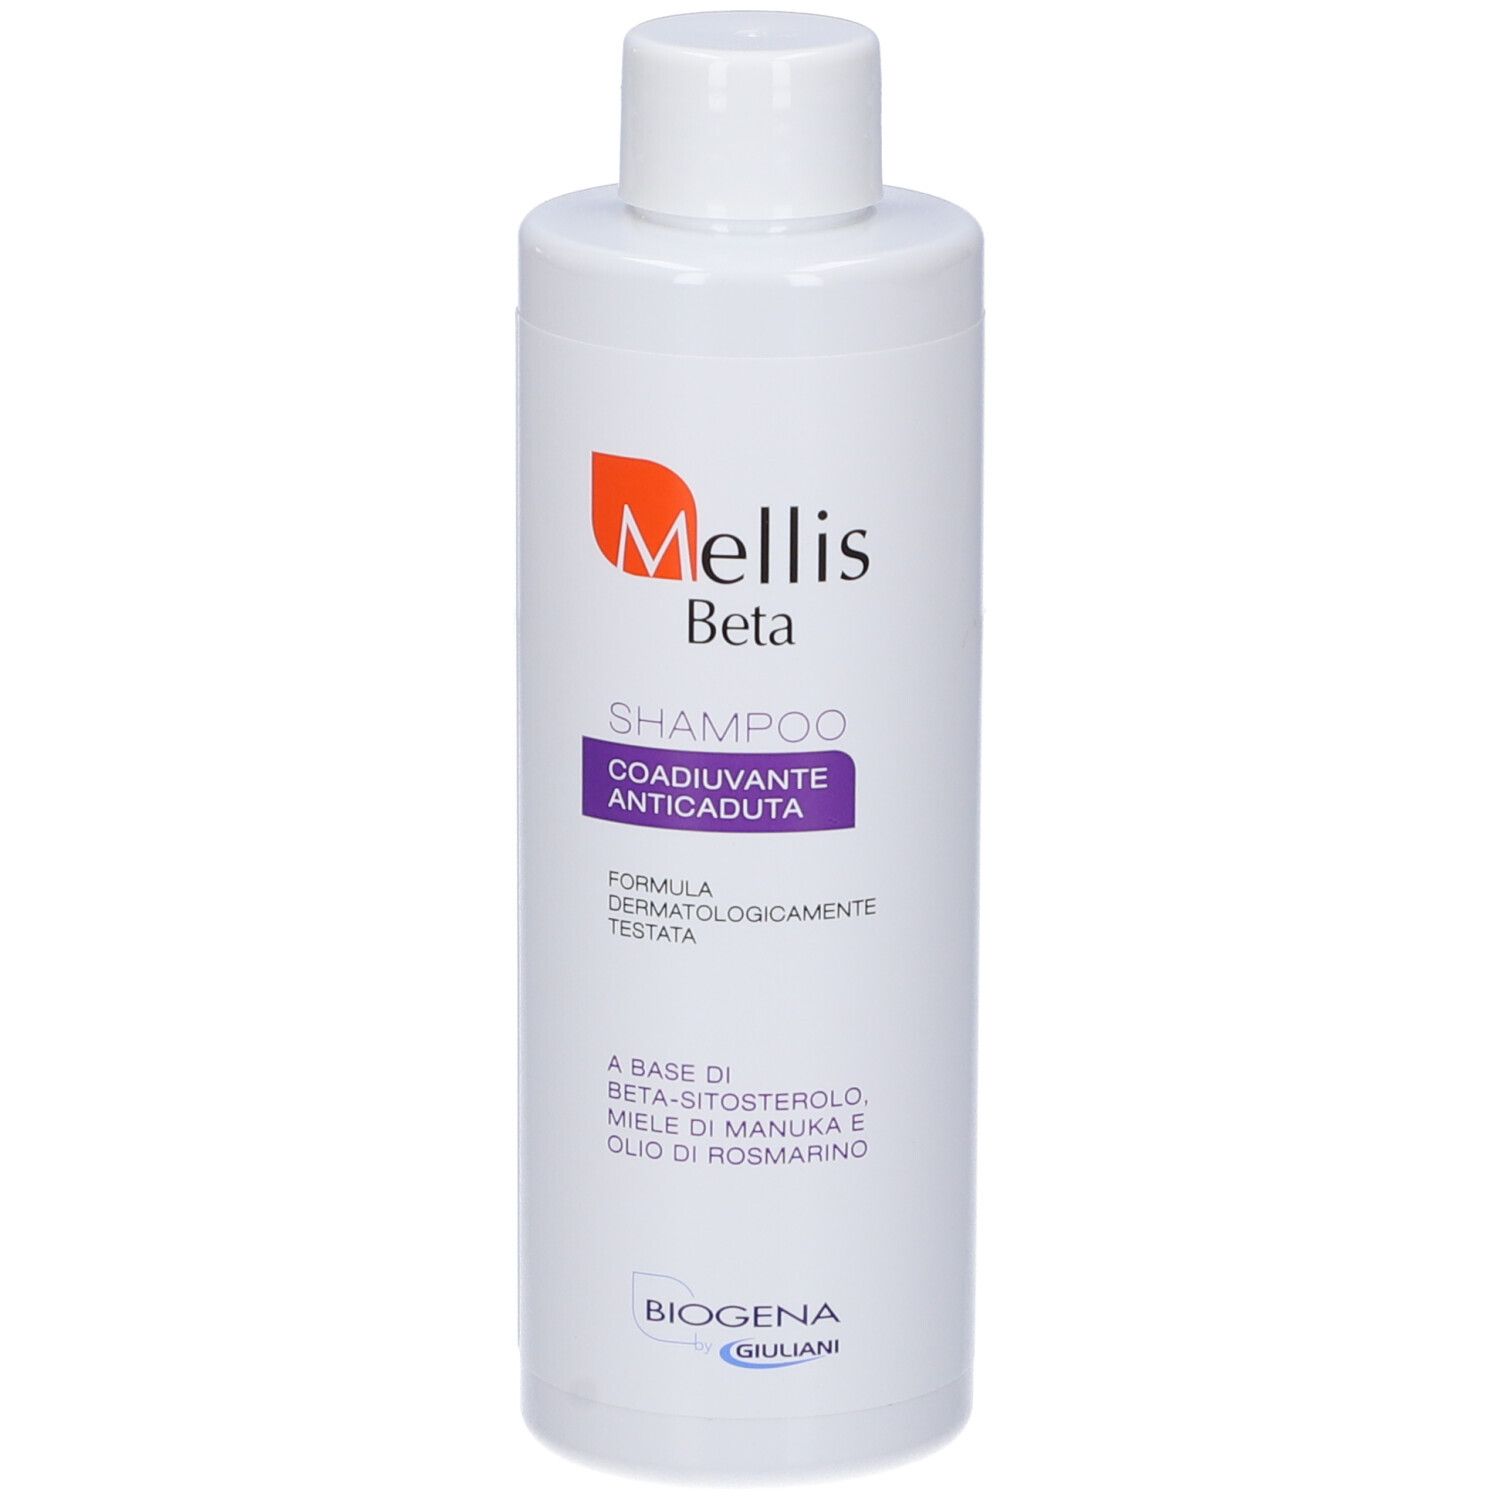 Image of Mellis Beta Shampoo